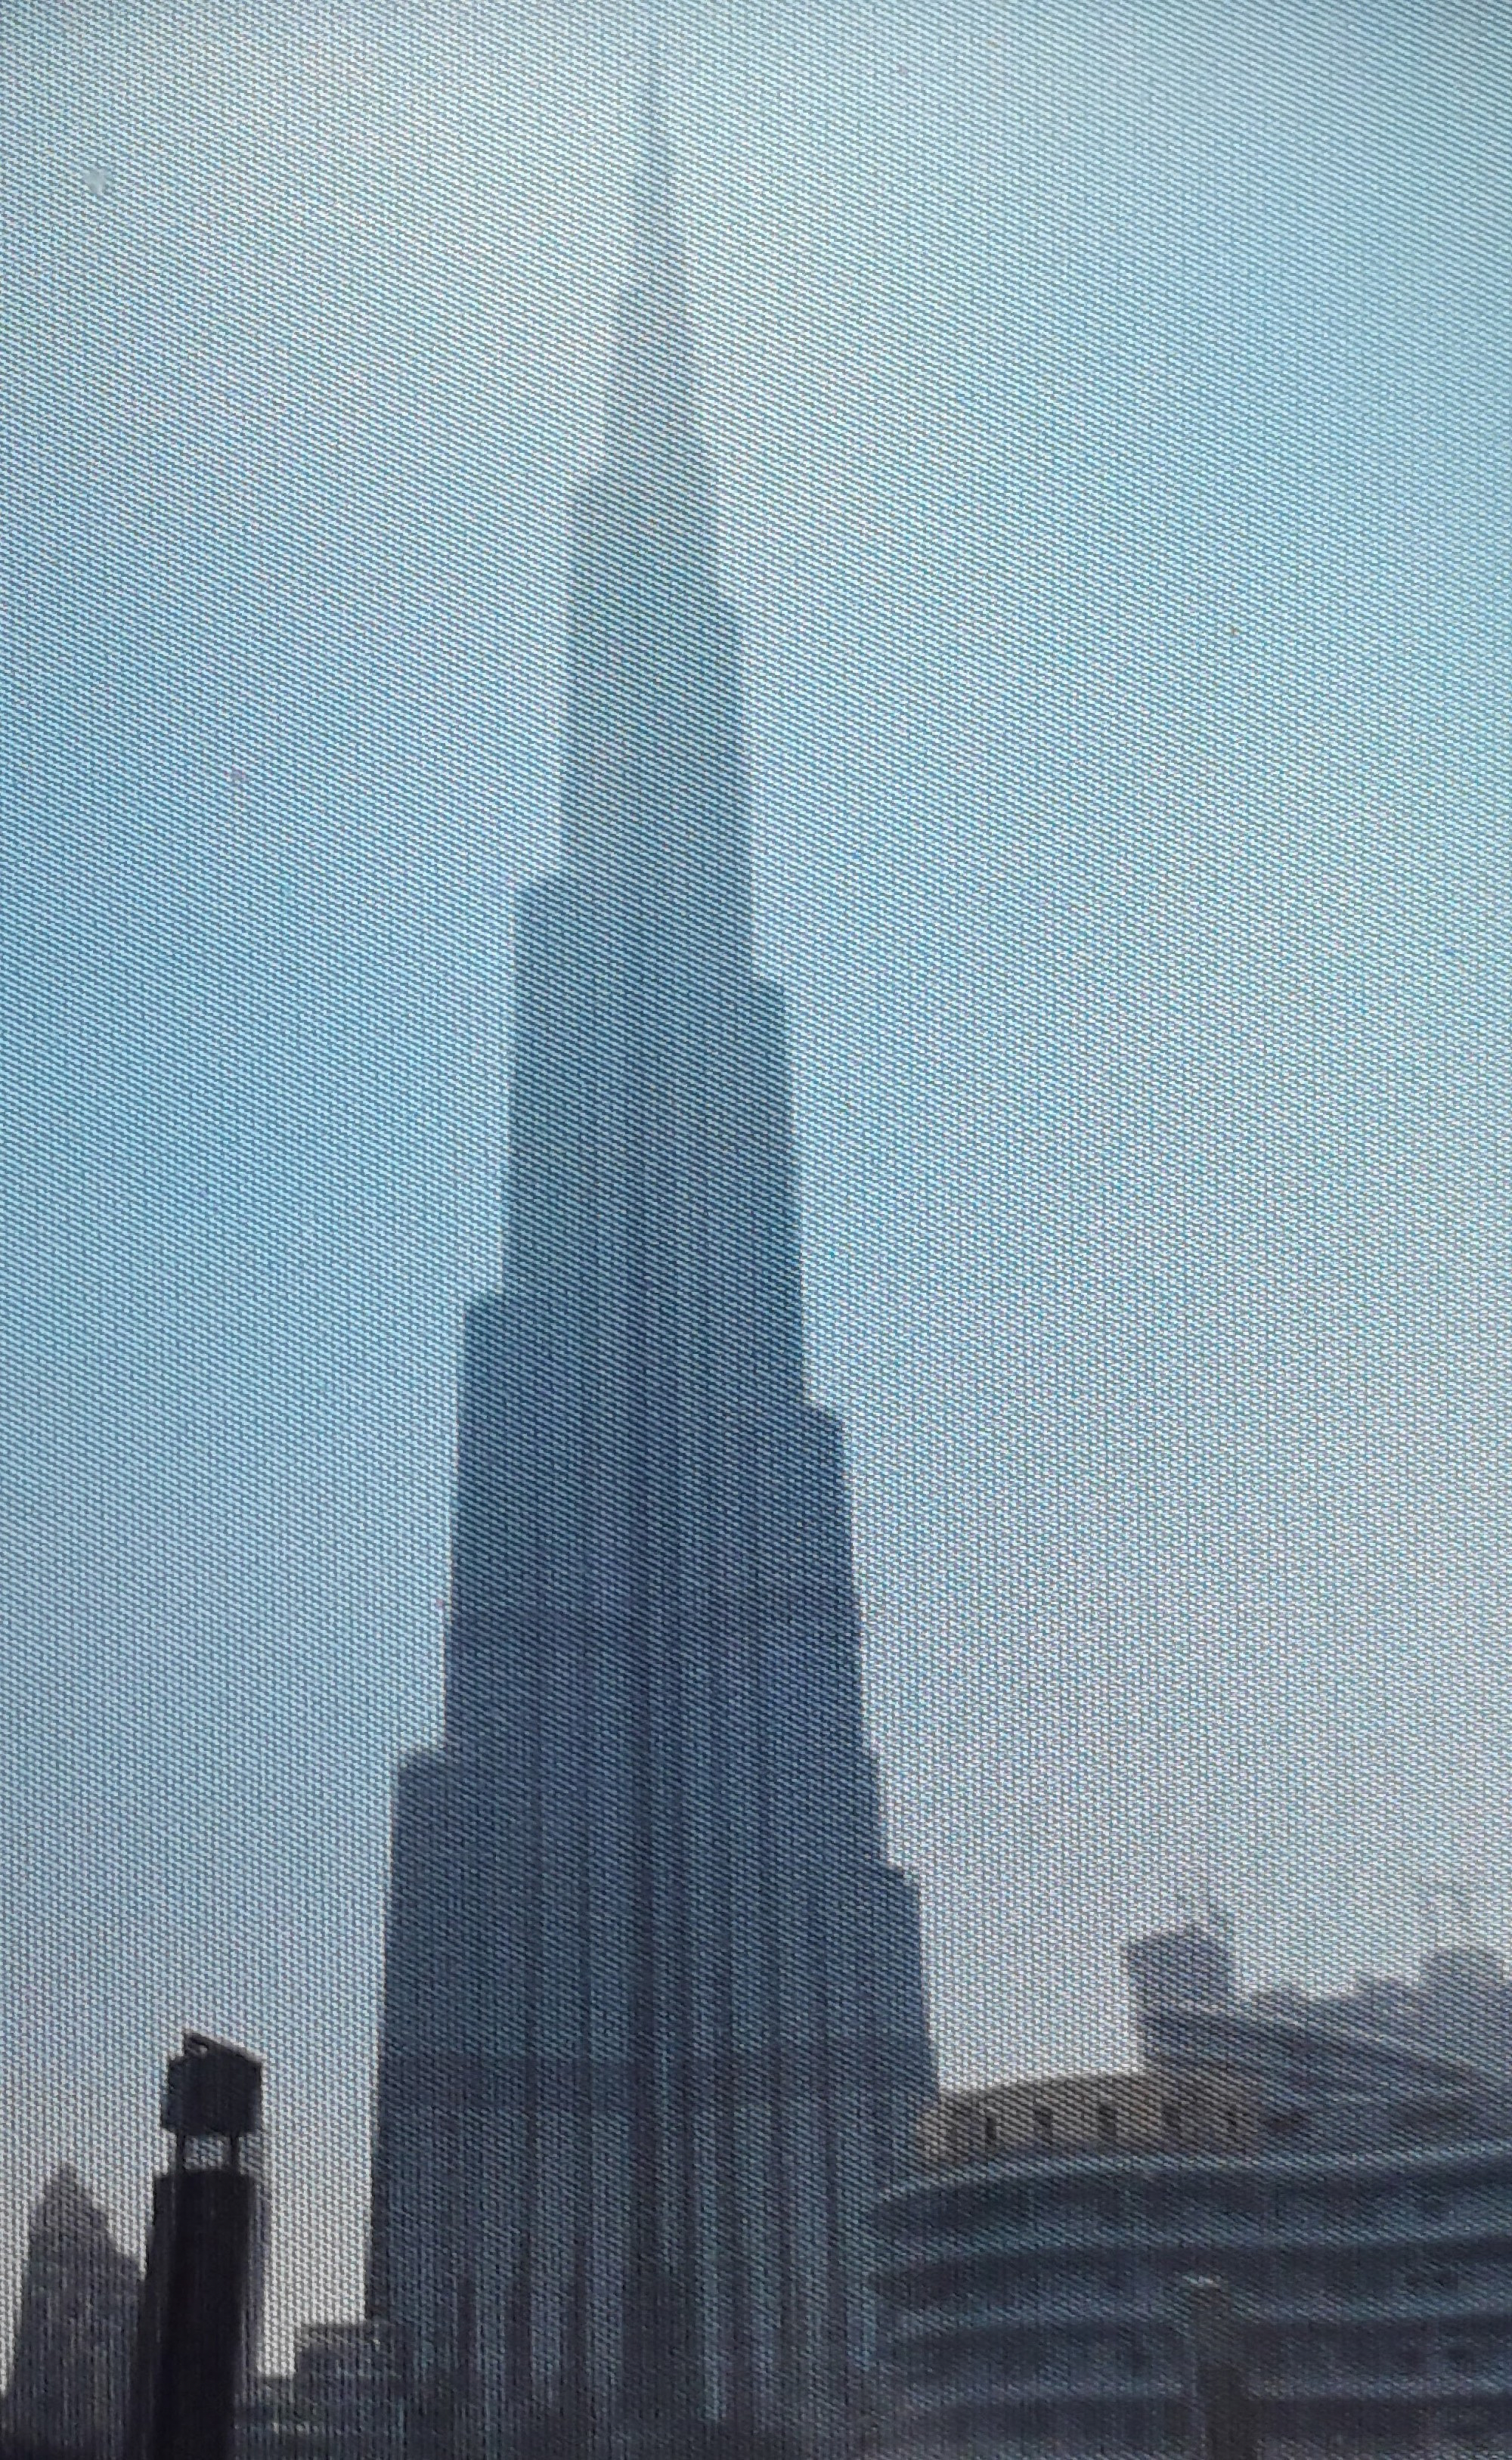 Burj Khalifa, world's tallest building, Dubai UAE